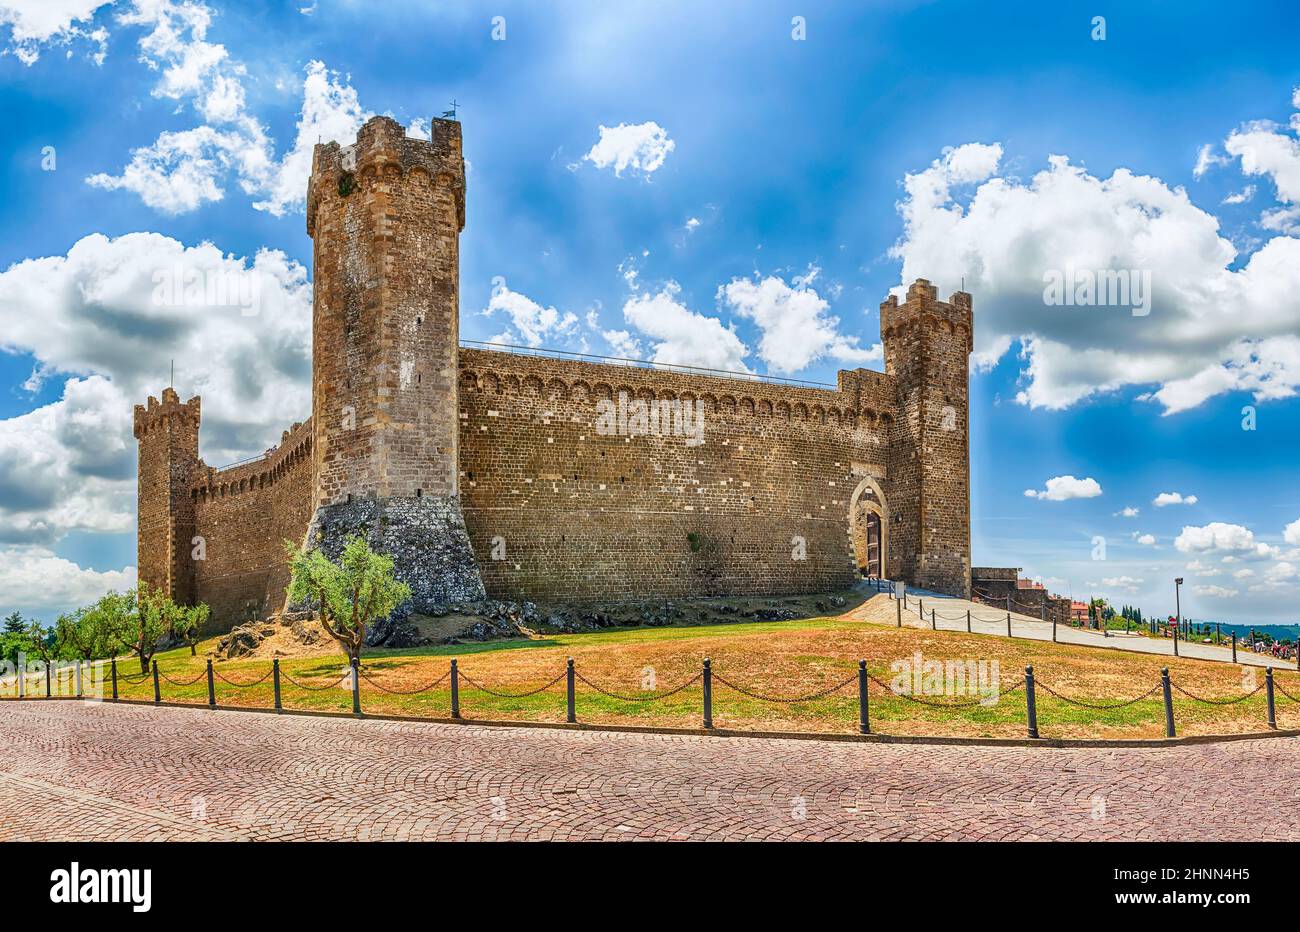 Medieval italian fortress, iconic landmark in Montalcino, Tuscany, Italy Stock Photo